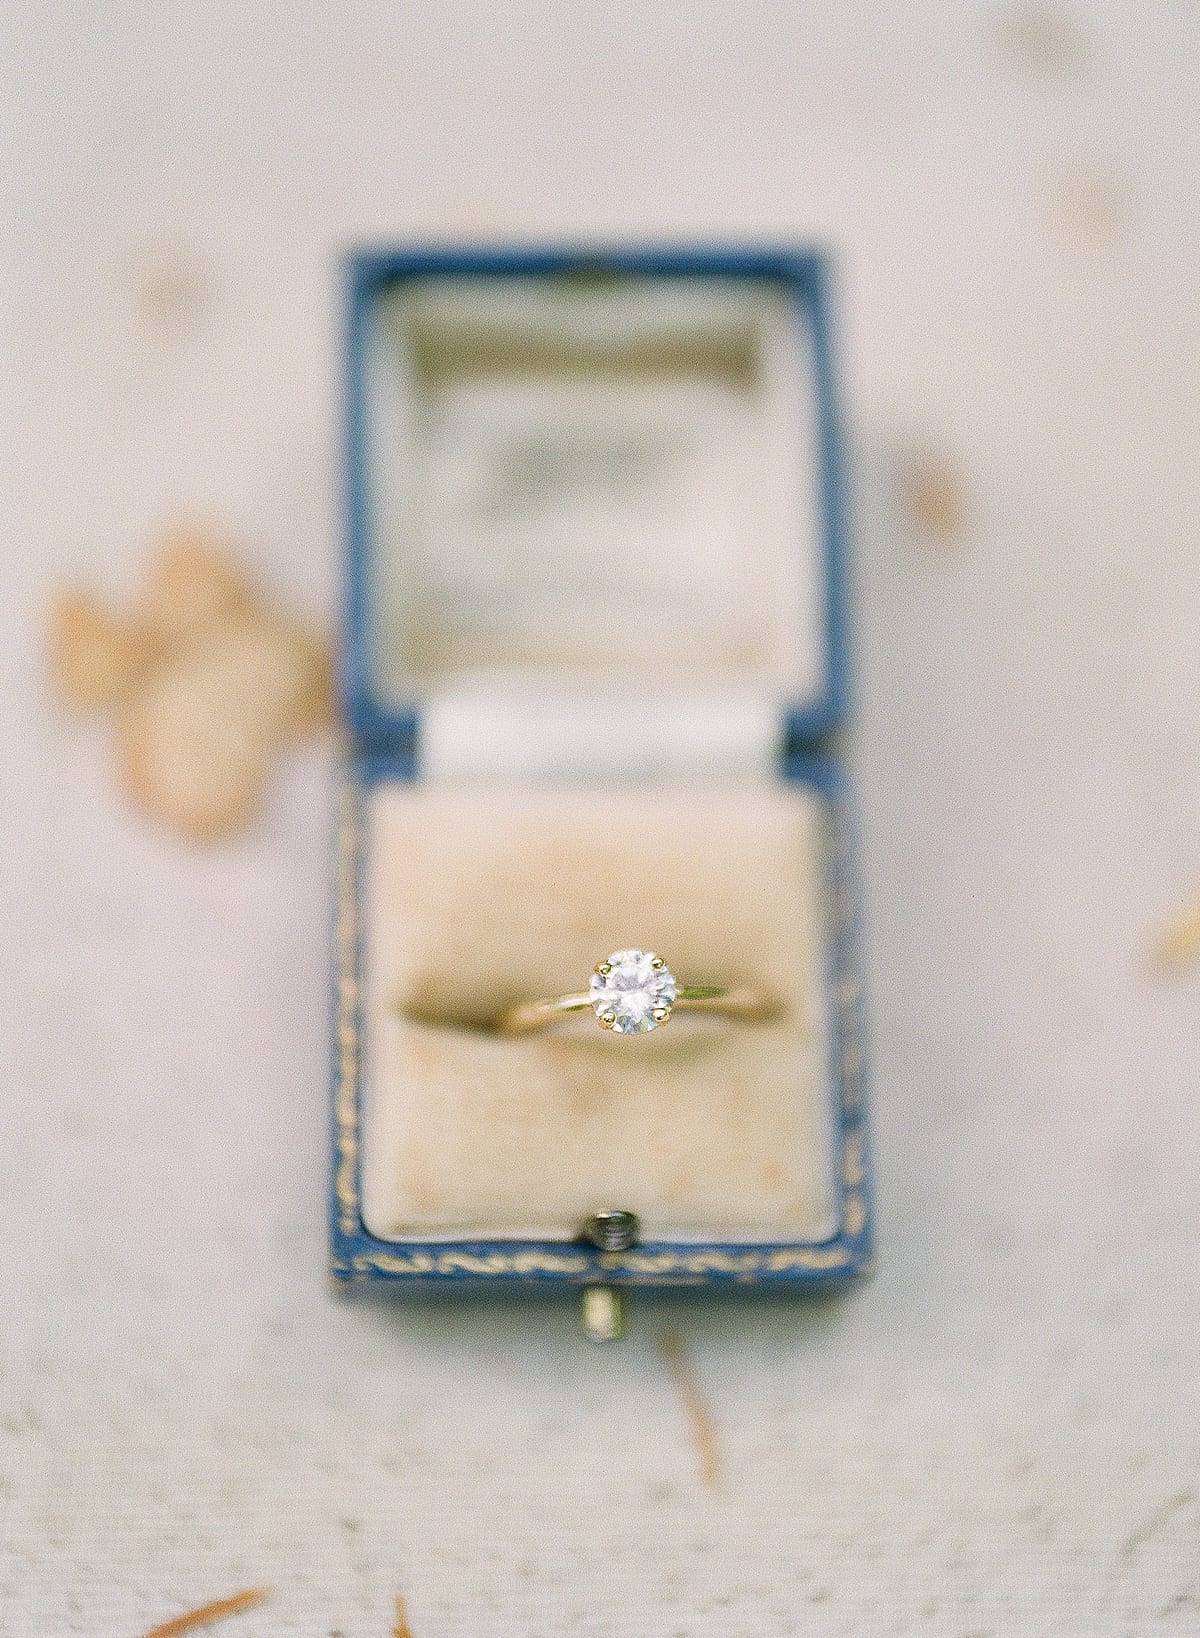 Nashville Wedding Photographer captures ring in vintage box photo